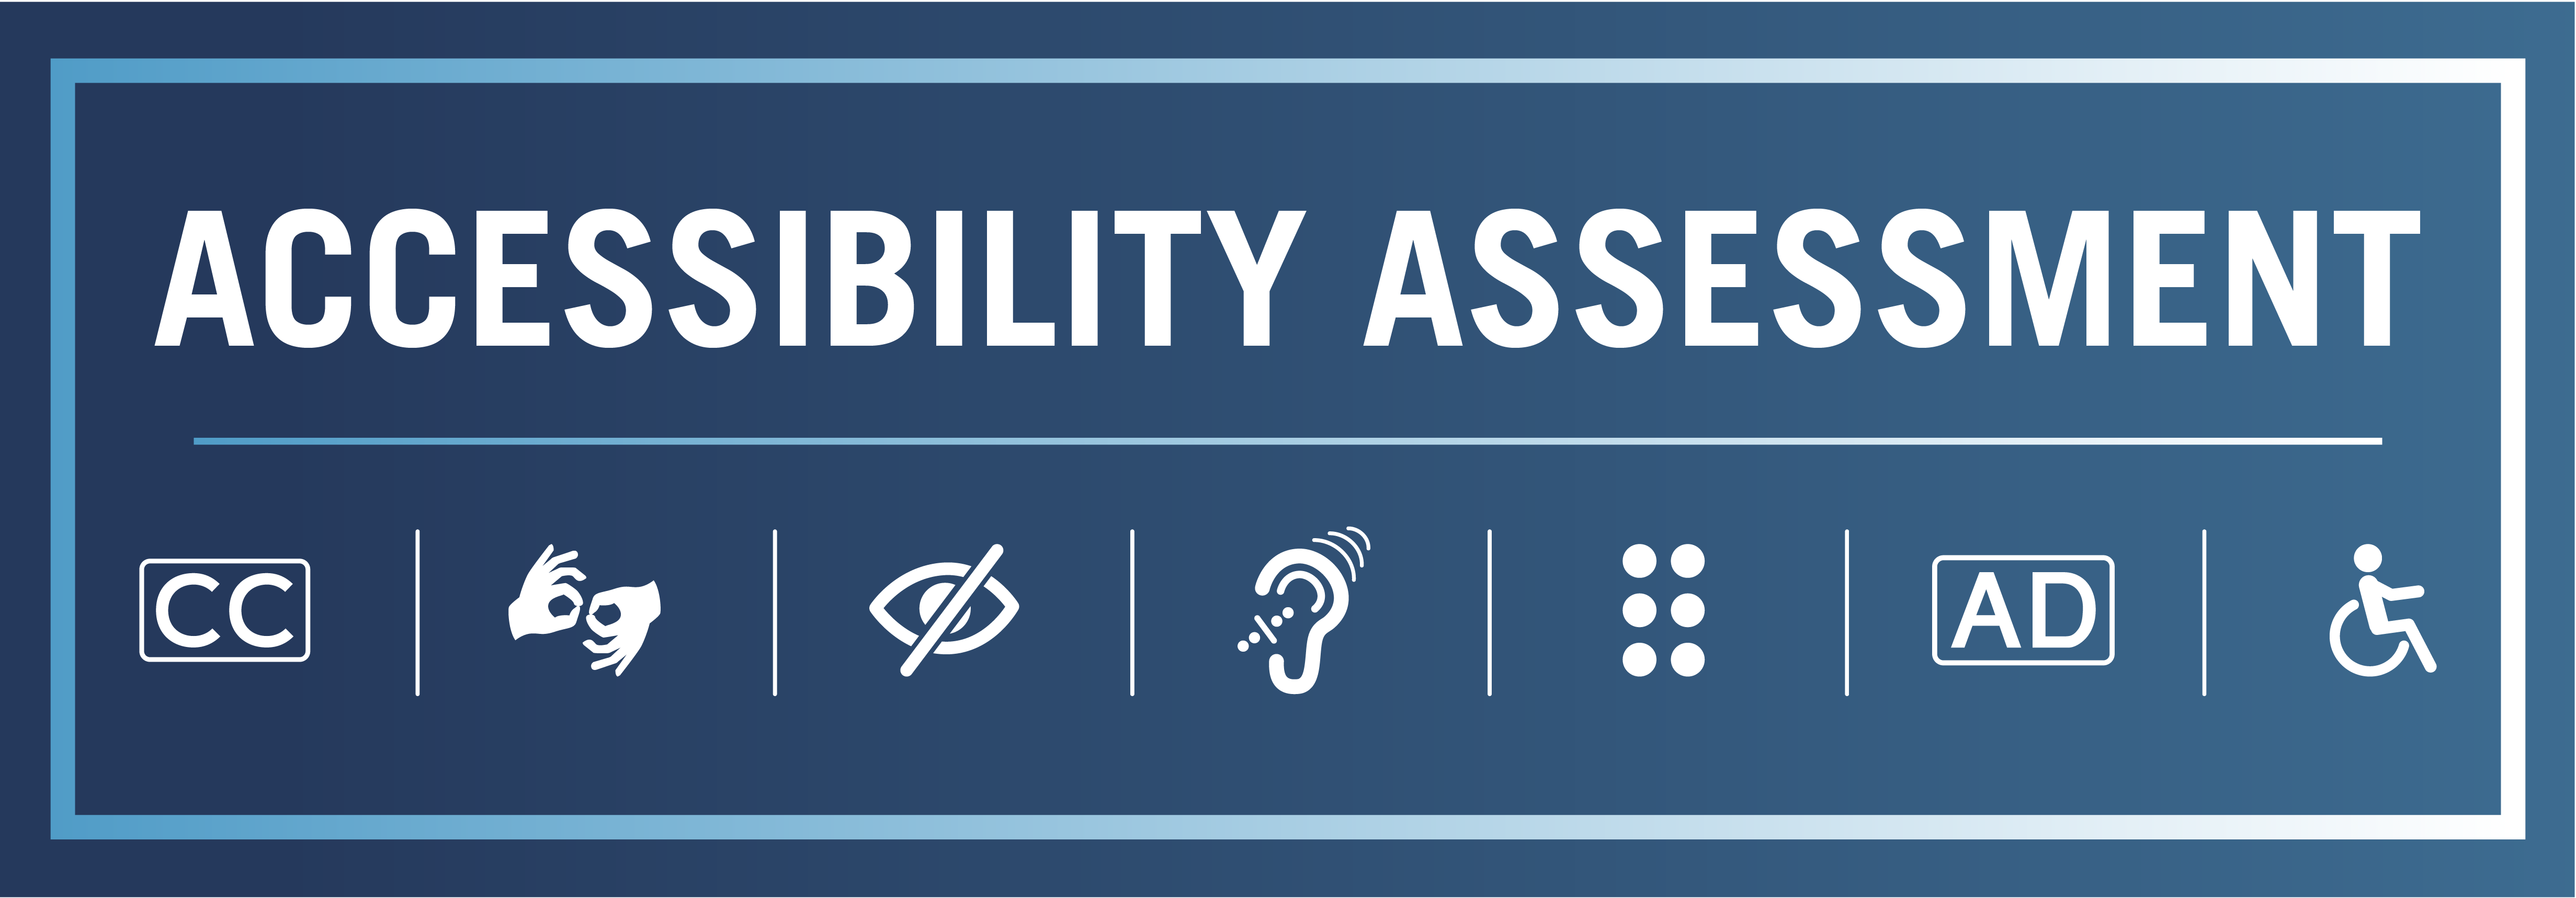 Accessibility Assessment Slider